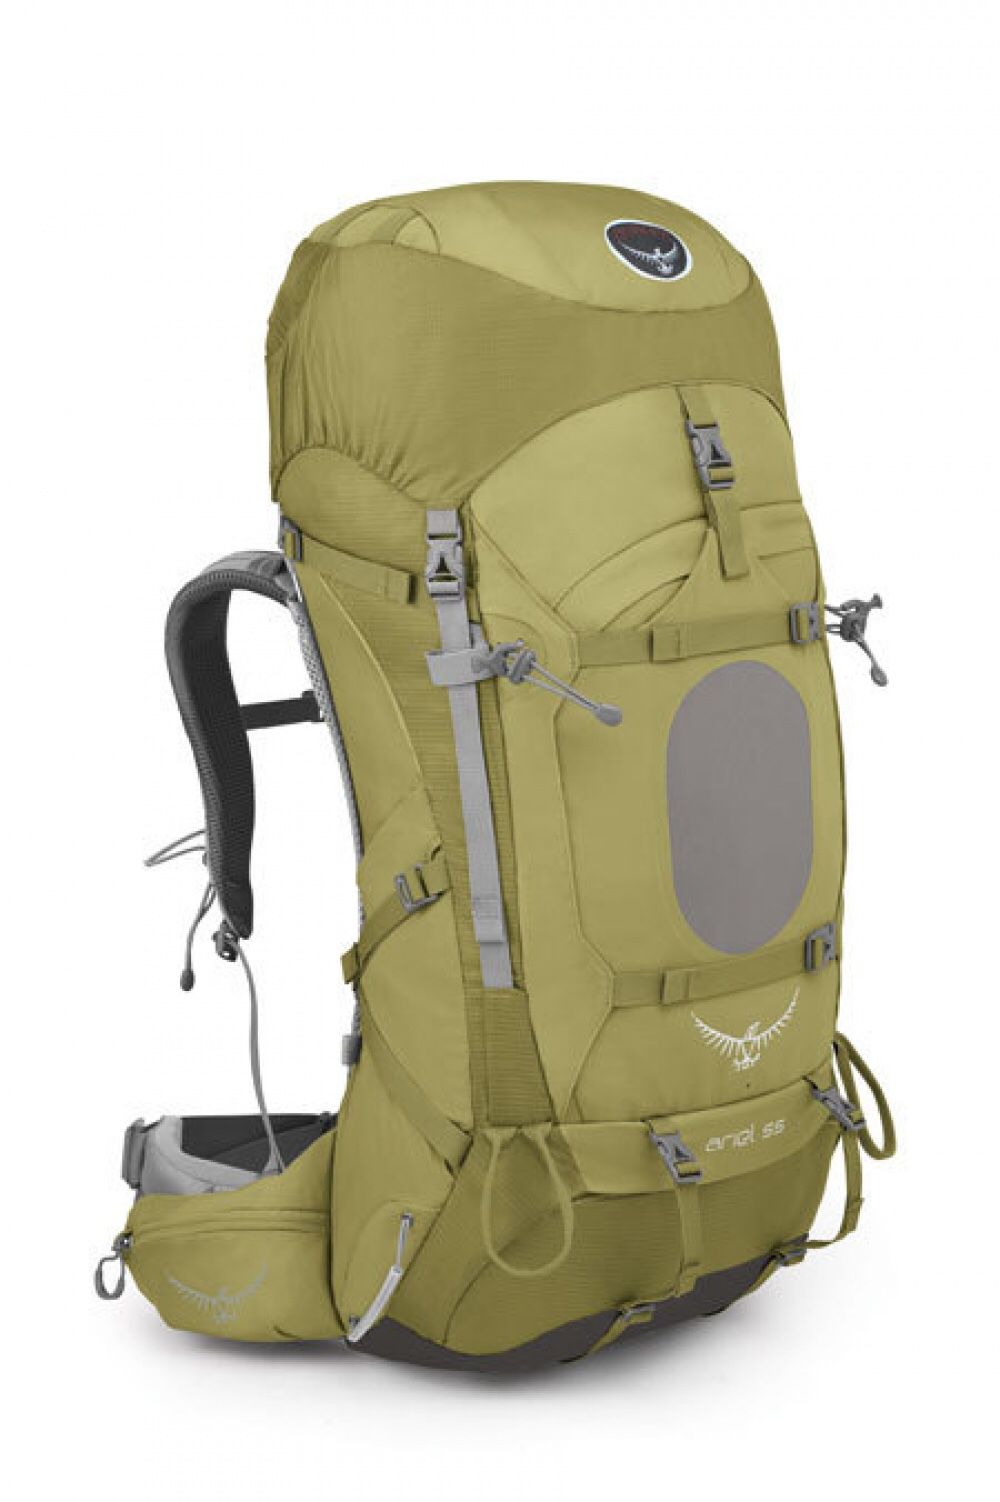 Brand new Osprey Backpacking pack